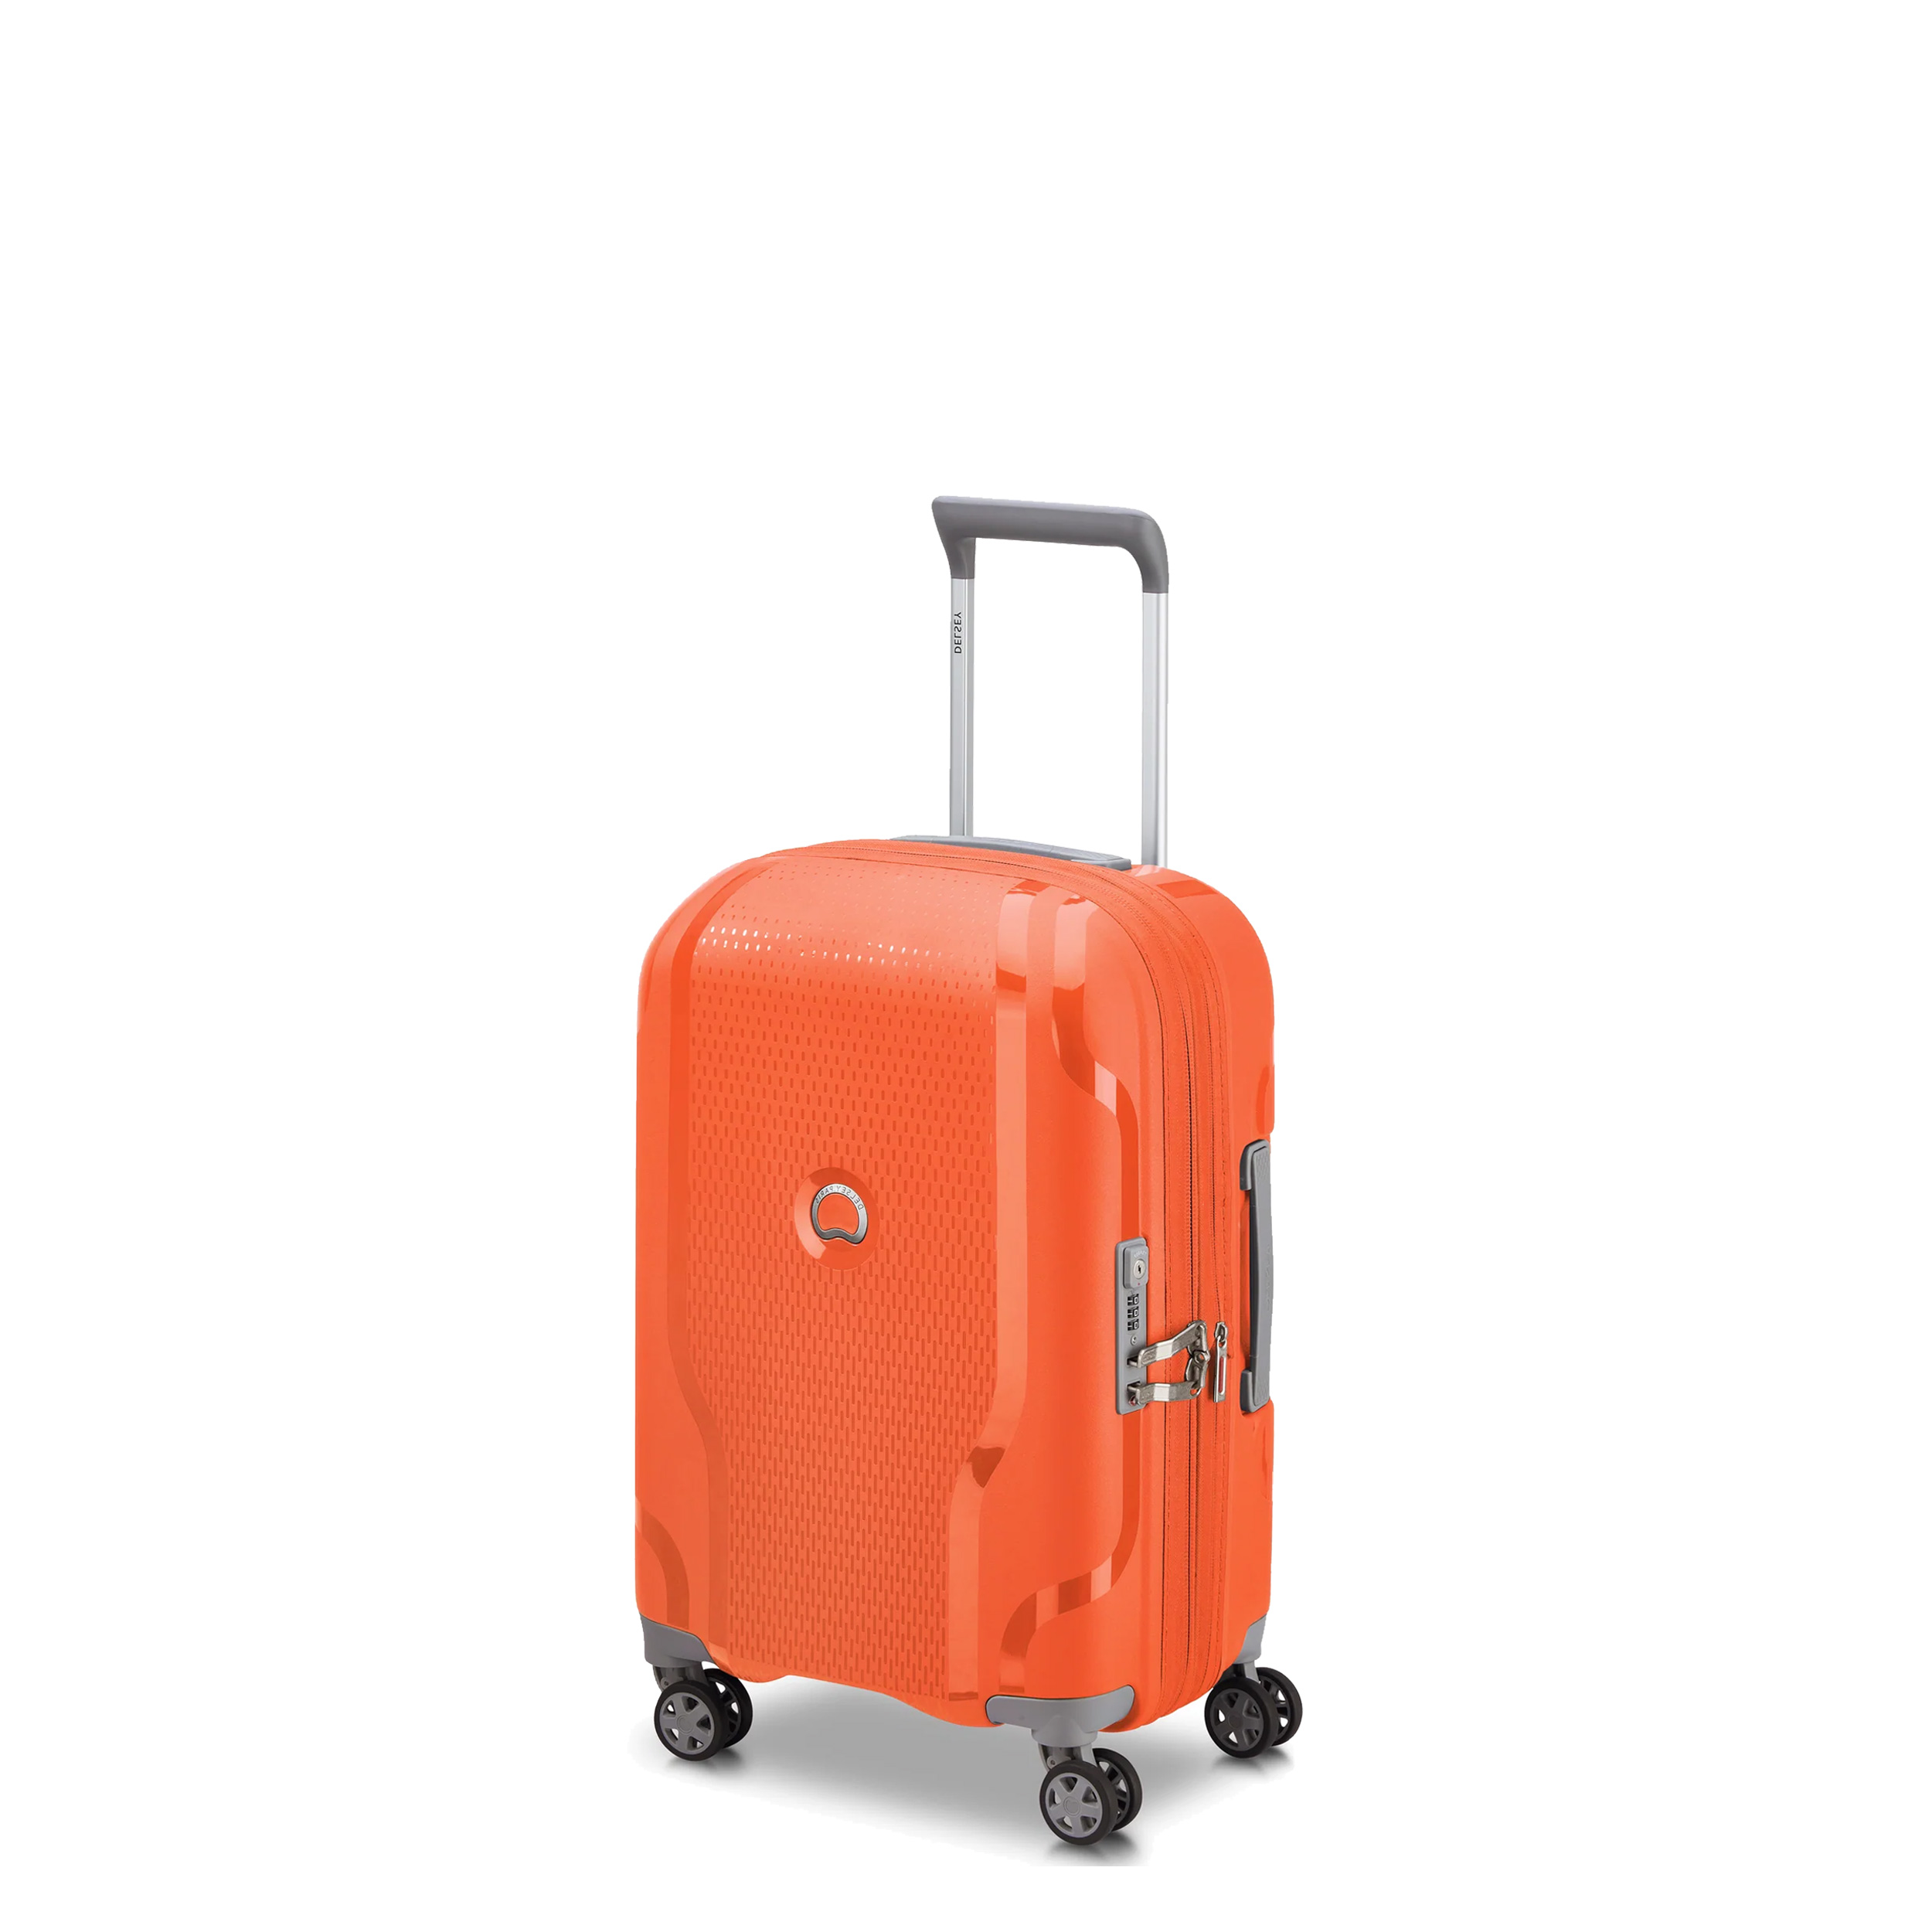 Valise cabine S extensible 55cm Clavel Delsey orange tangerin profil